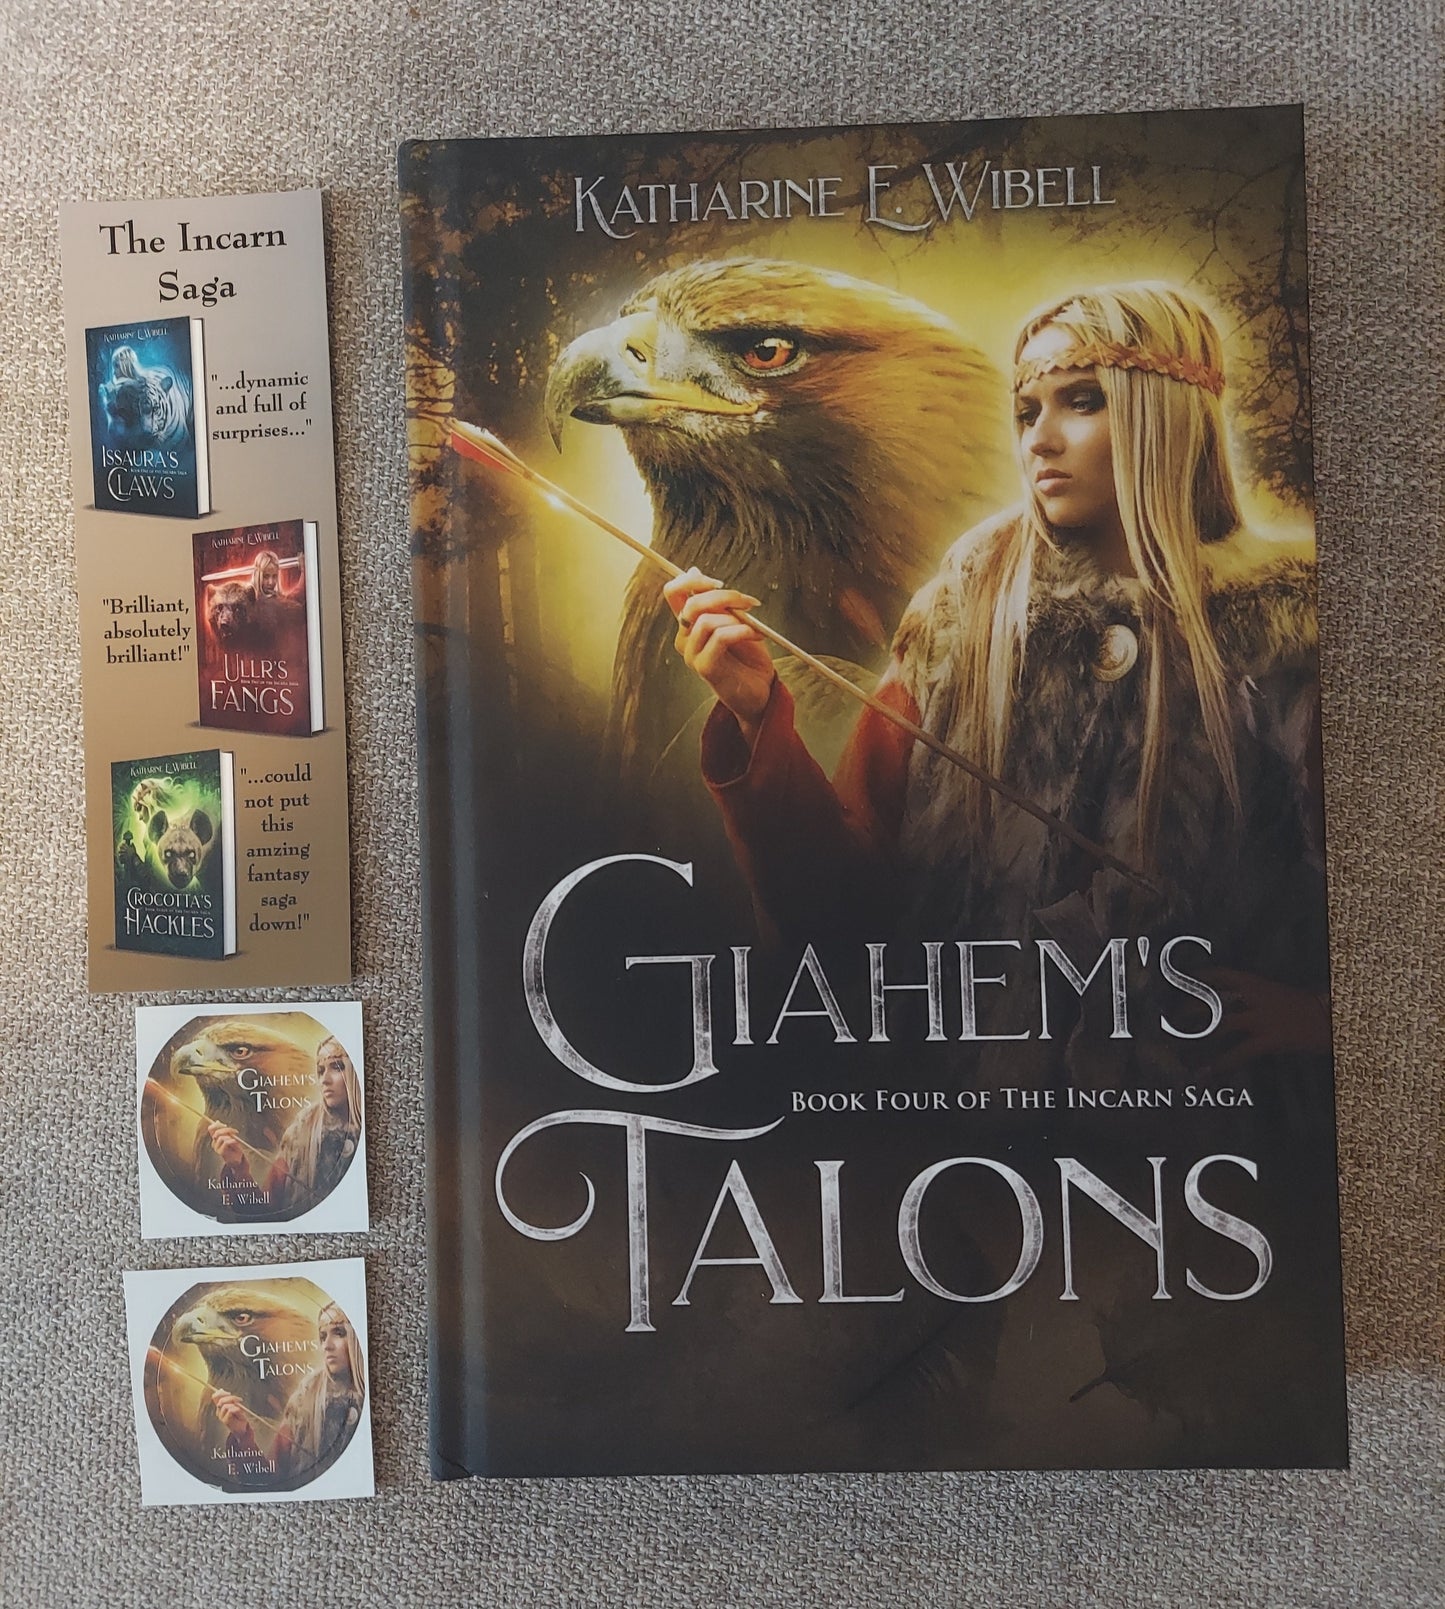 Print Formats - Giahem's Talons: Book Four of The Incarn Saga